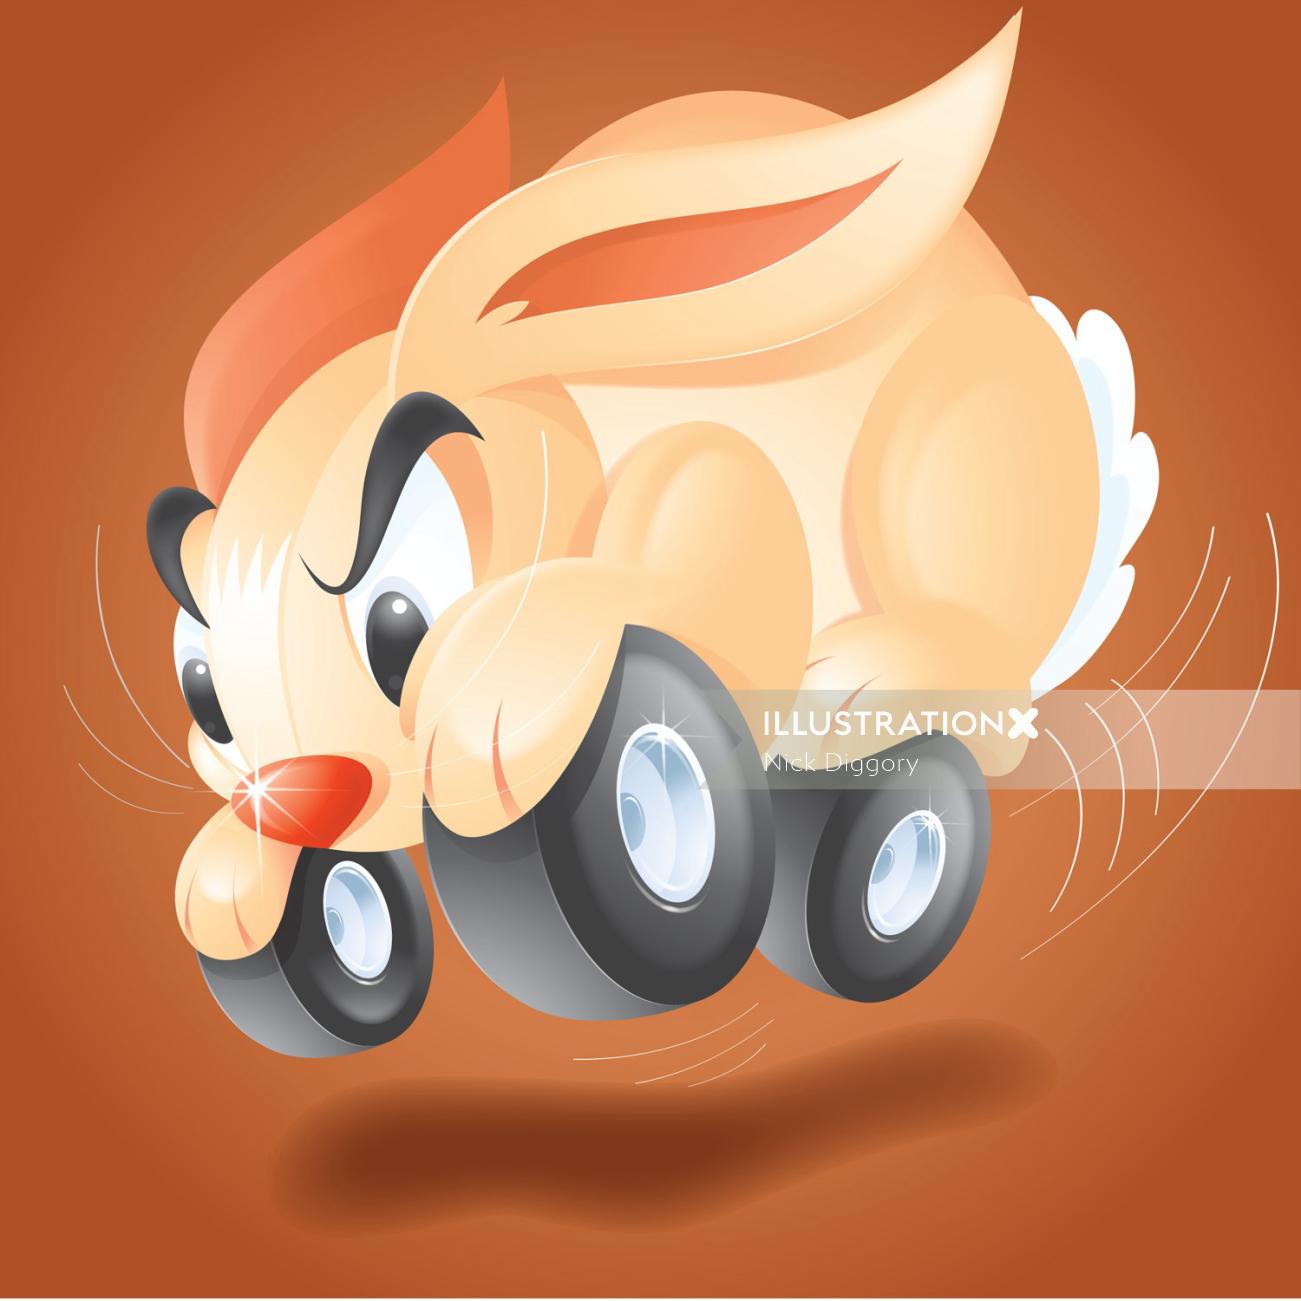 Digital Illustration of bunny with wheels
